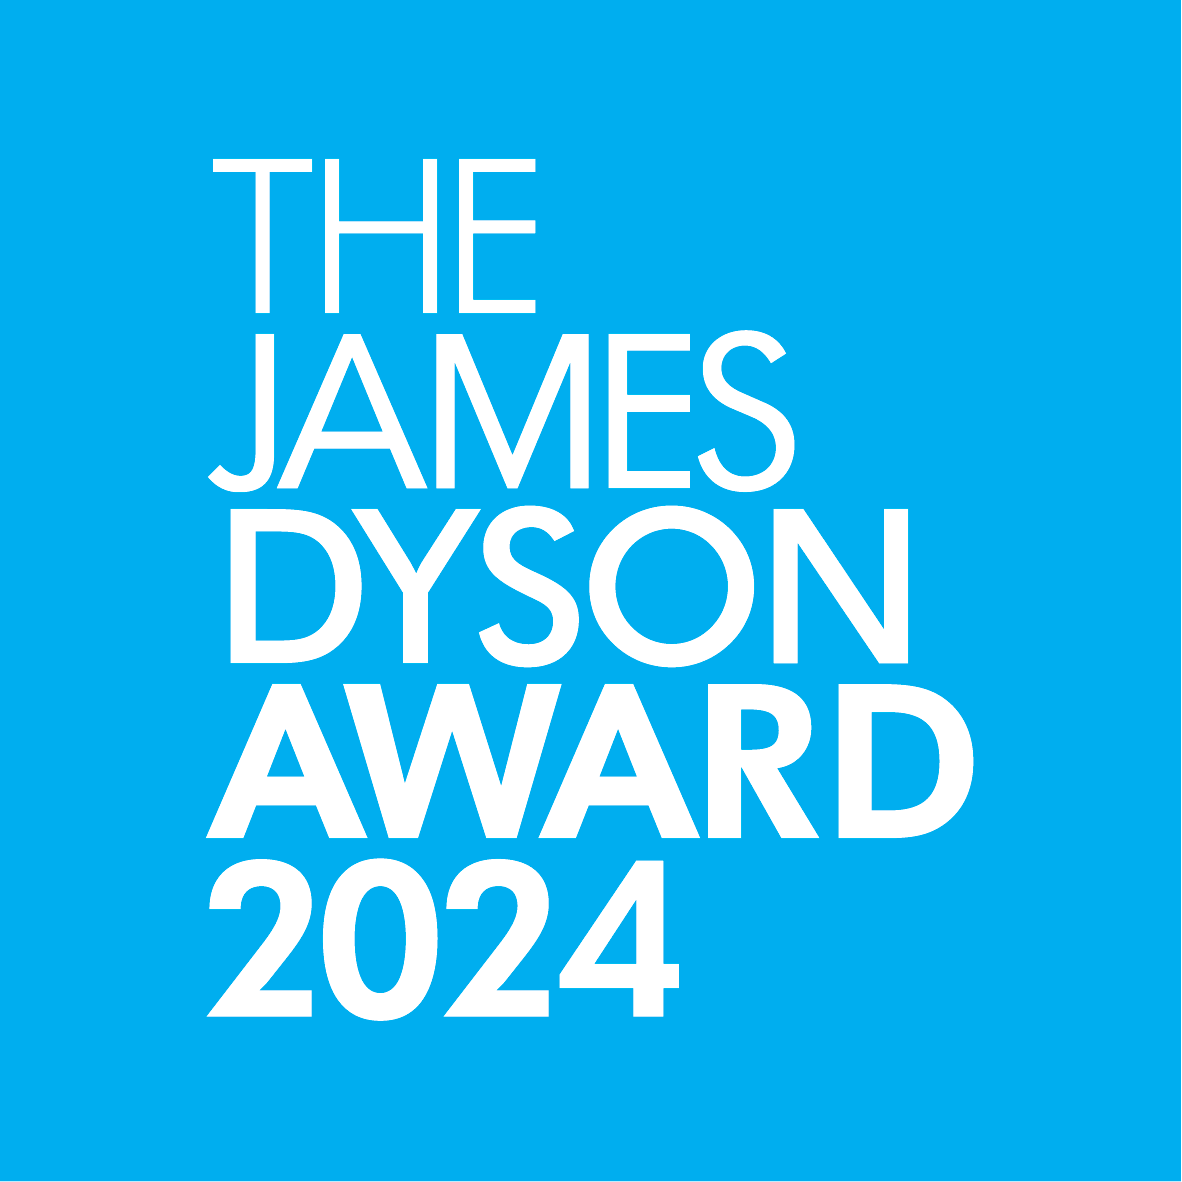 Studencki Konkurs Nagroda Jamesa Dysona